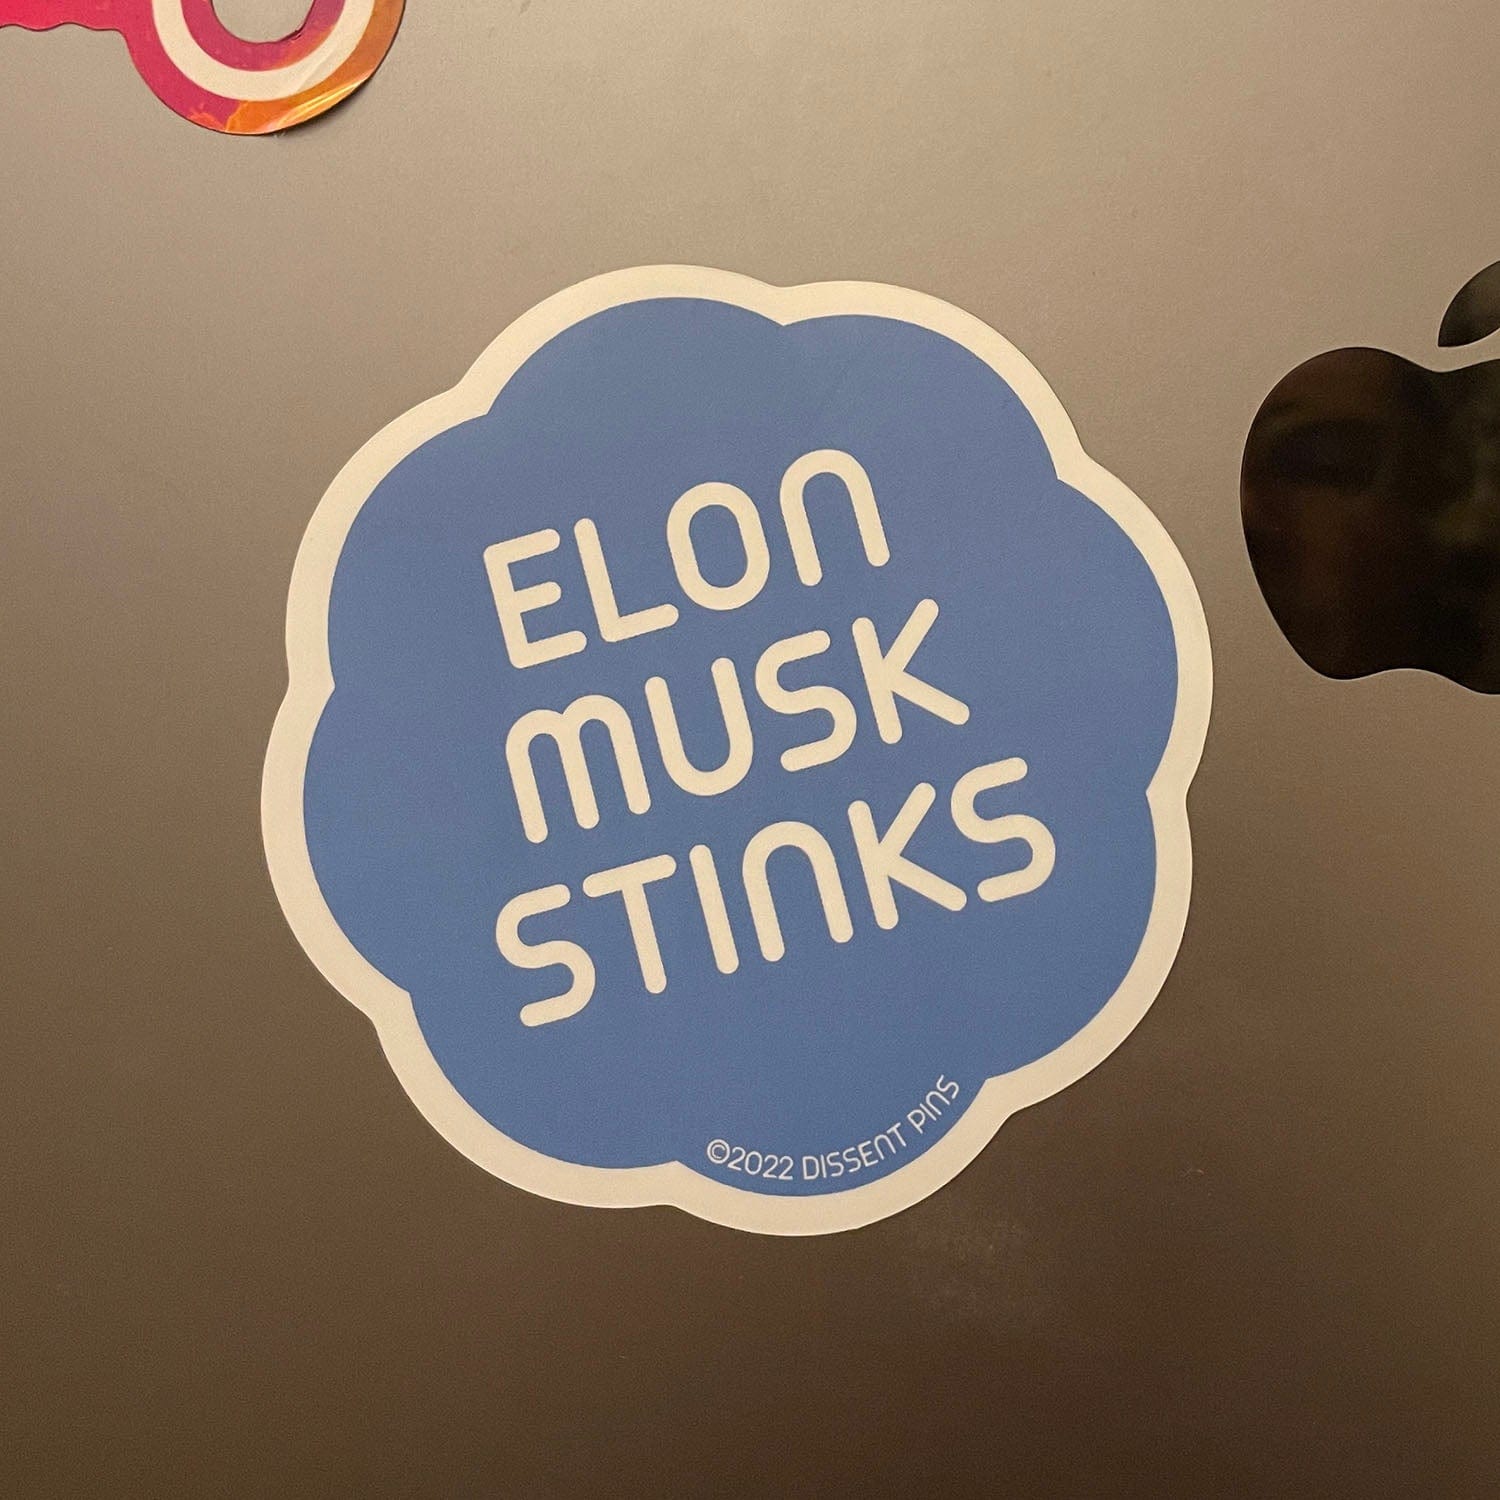 Elon Musk Stinks Sticker